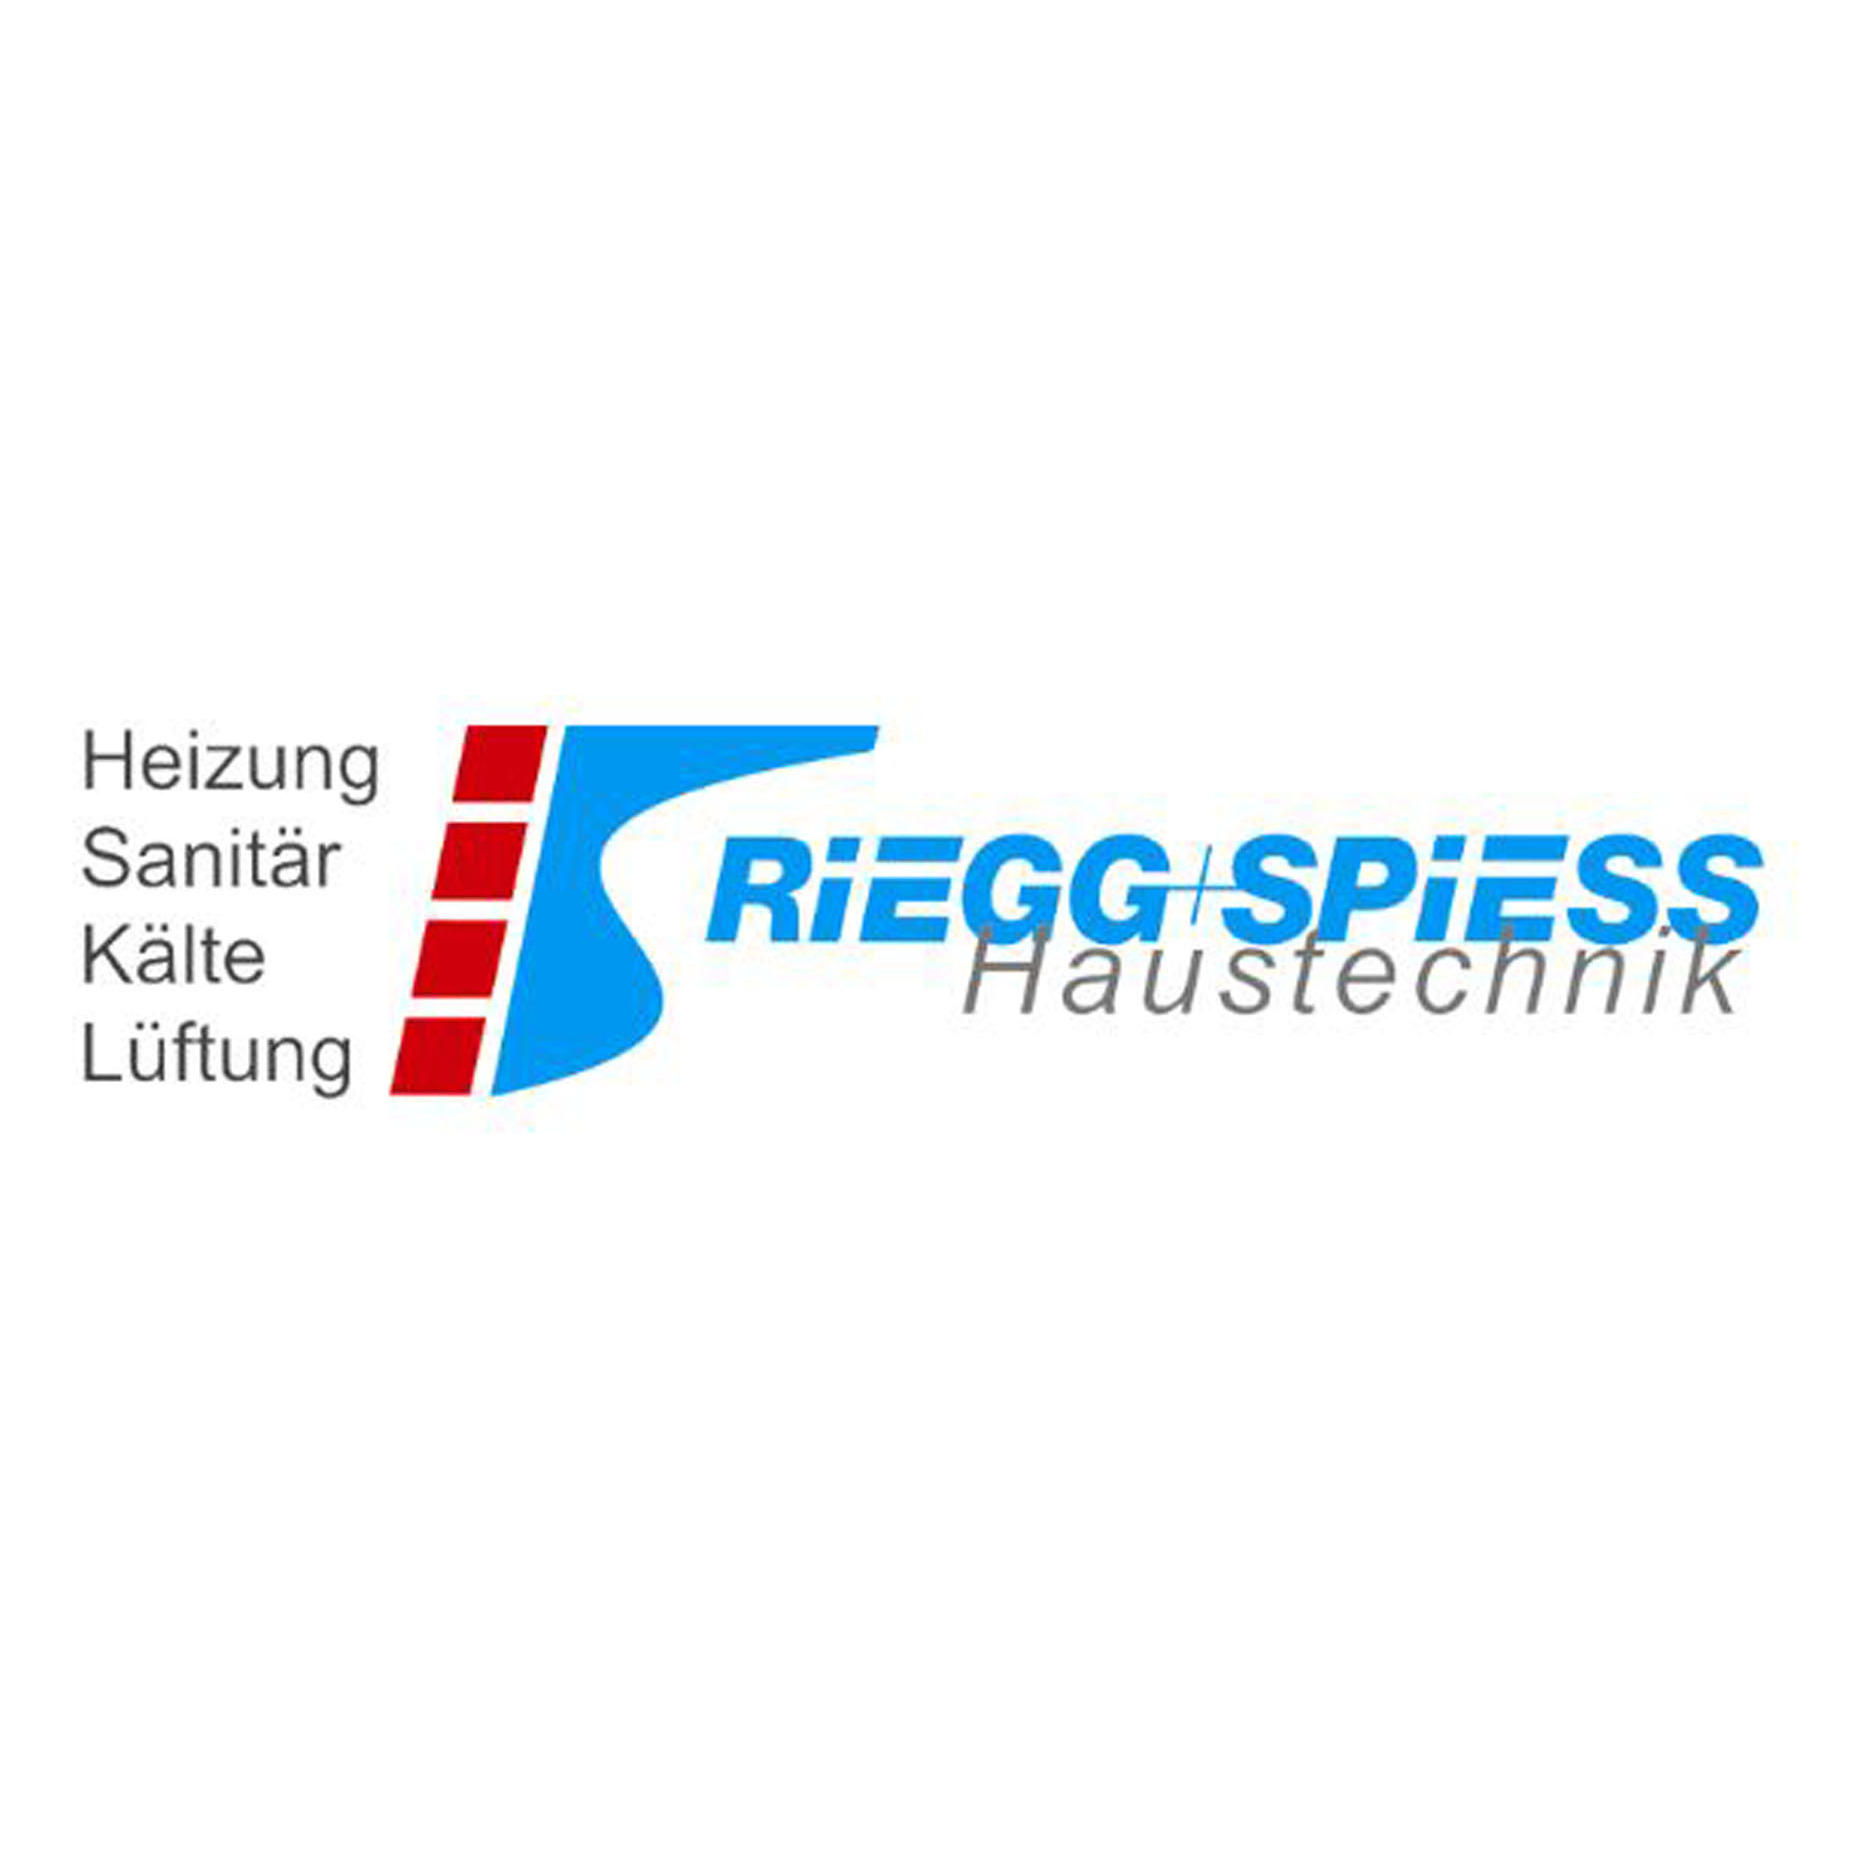 Riegg + Spiess Haustechnik GmbH & Co. KG - Heating Contractor - Günzburg - 08221 90010 Germany | ShowMeLocal.com